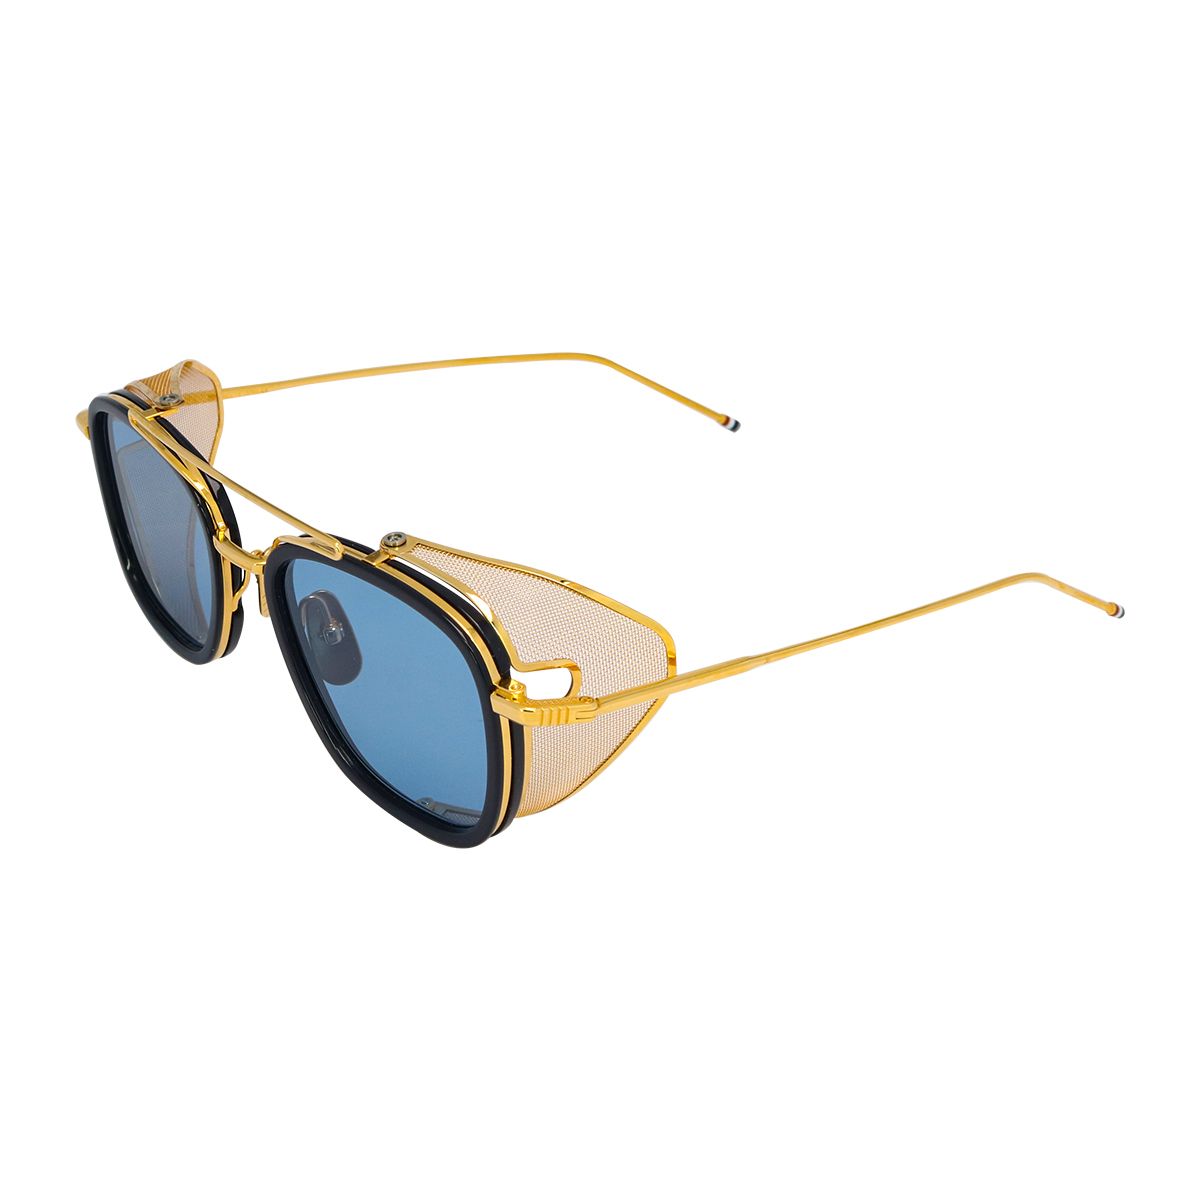 808 Square Sunglasses C - size 51